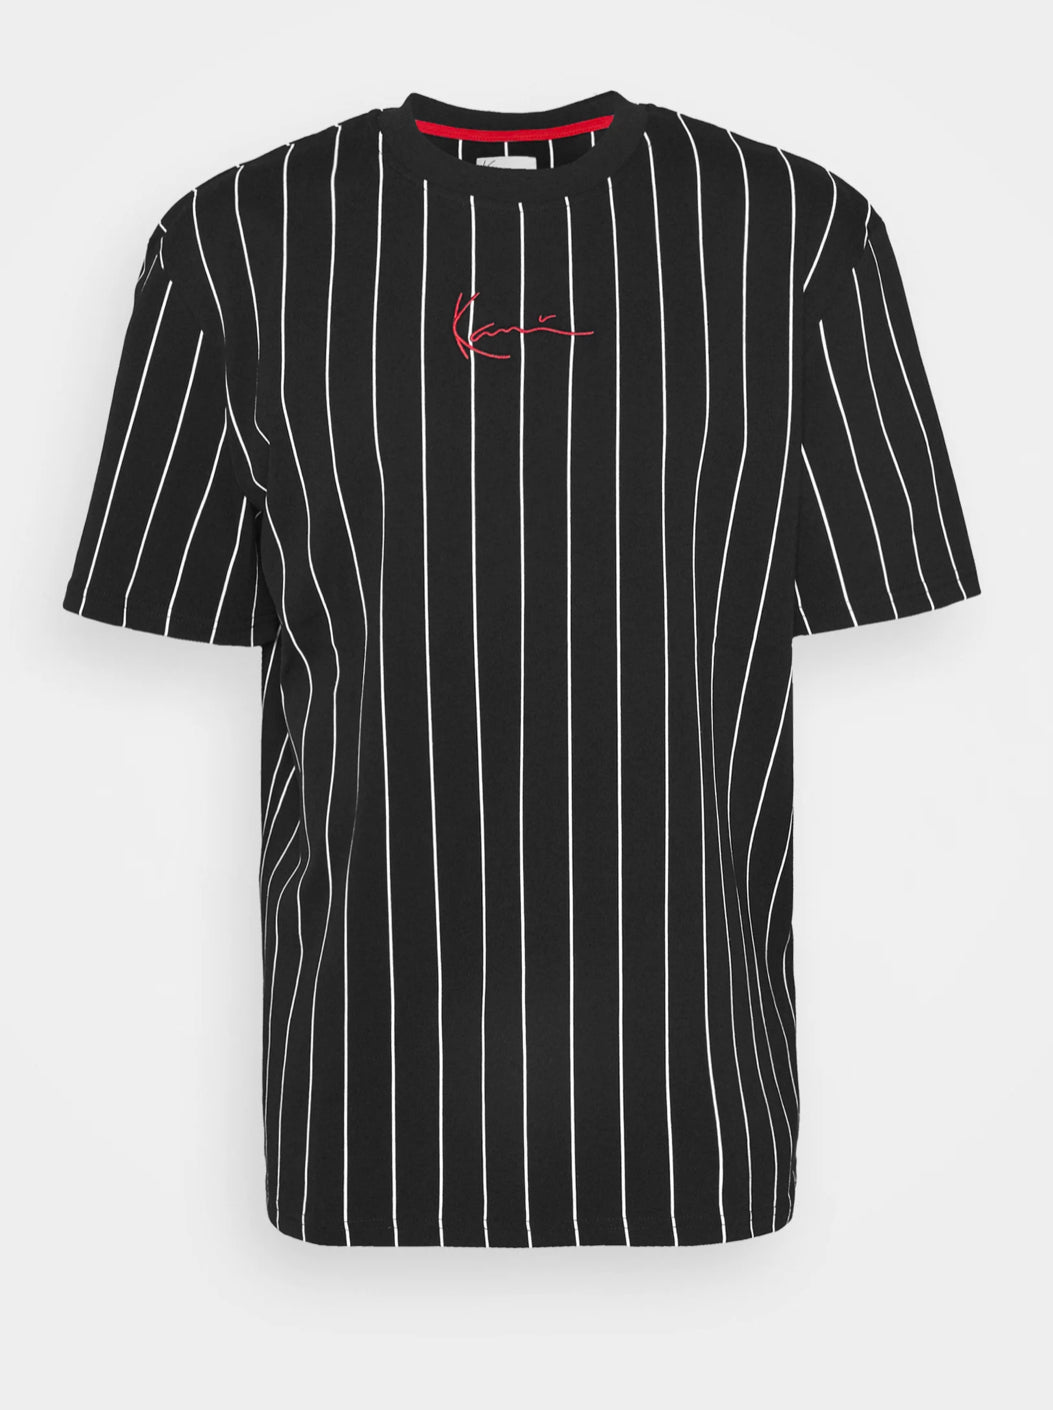 Karl Kani Small Signature Pinstripe T-Shirt black/white